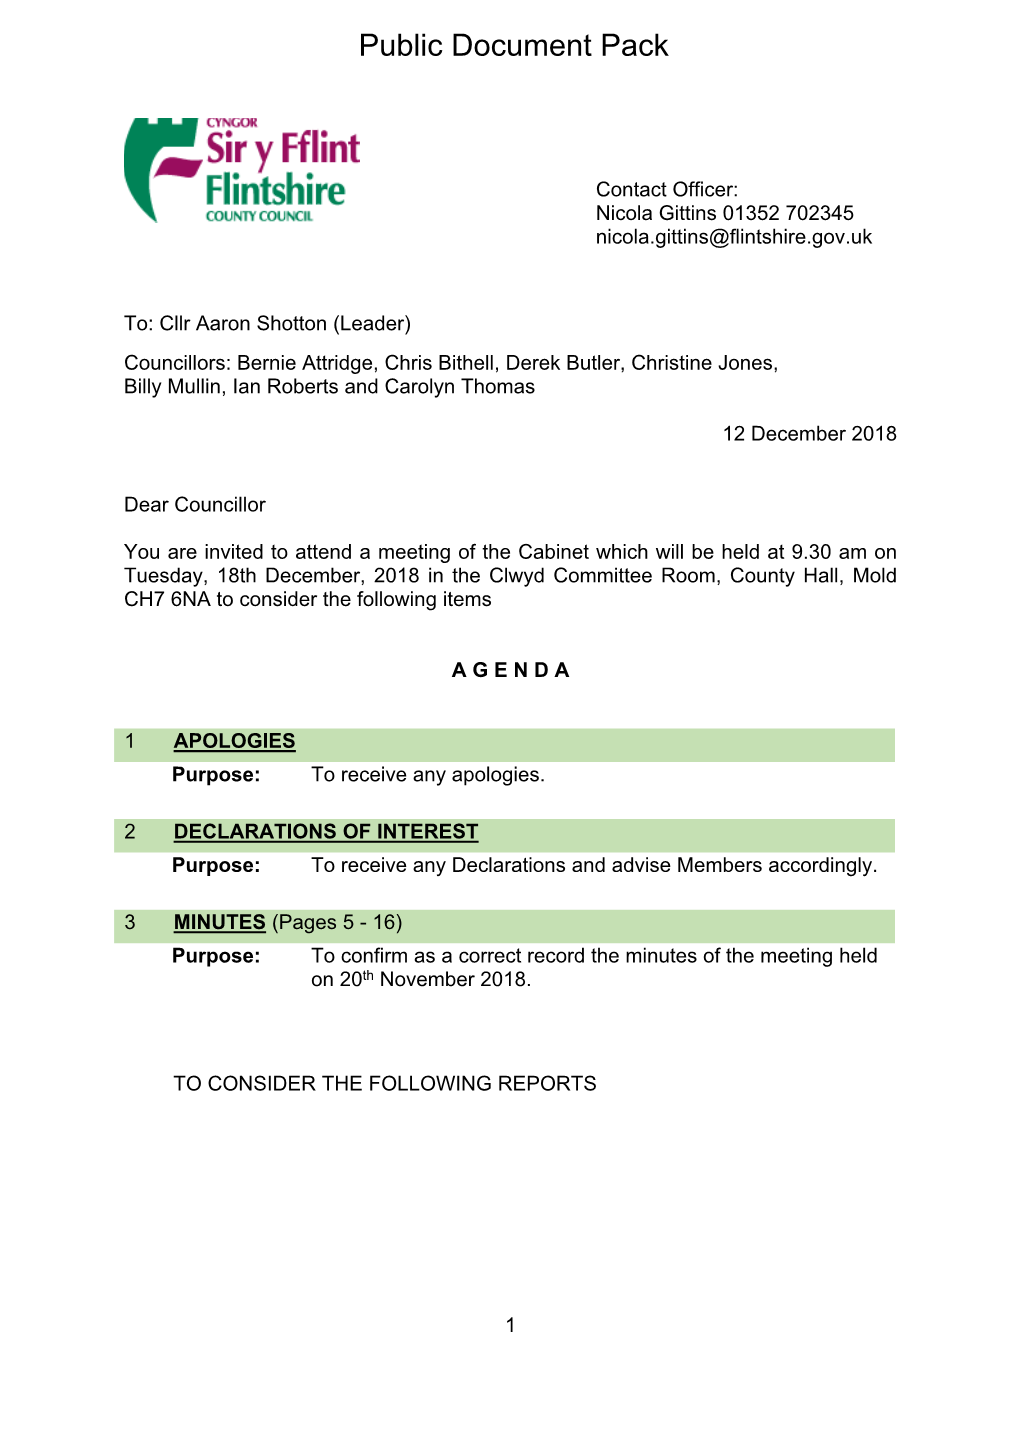 (Public Pack)Agenda Document for Cabinet, 18/12/2018 09:30